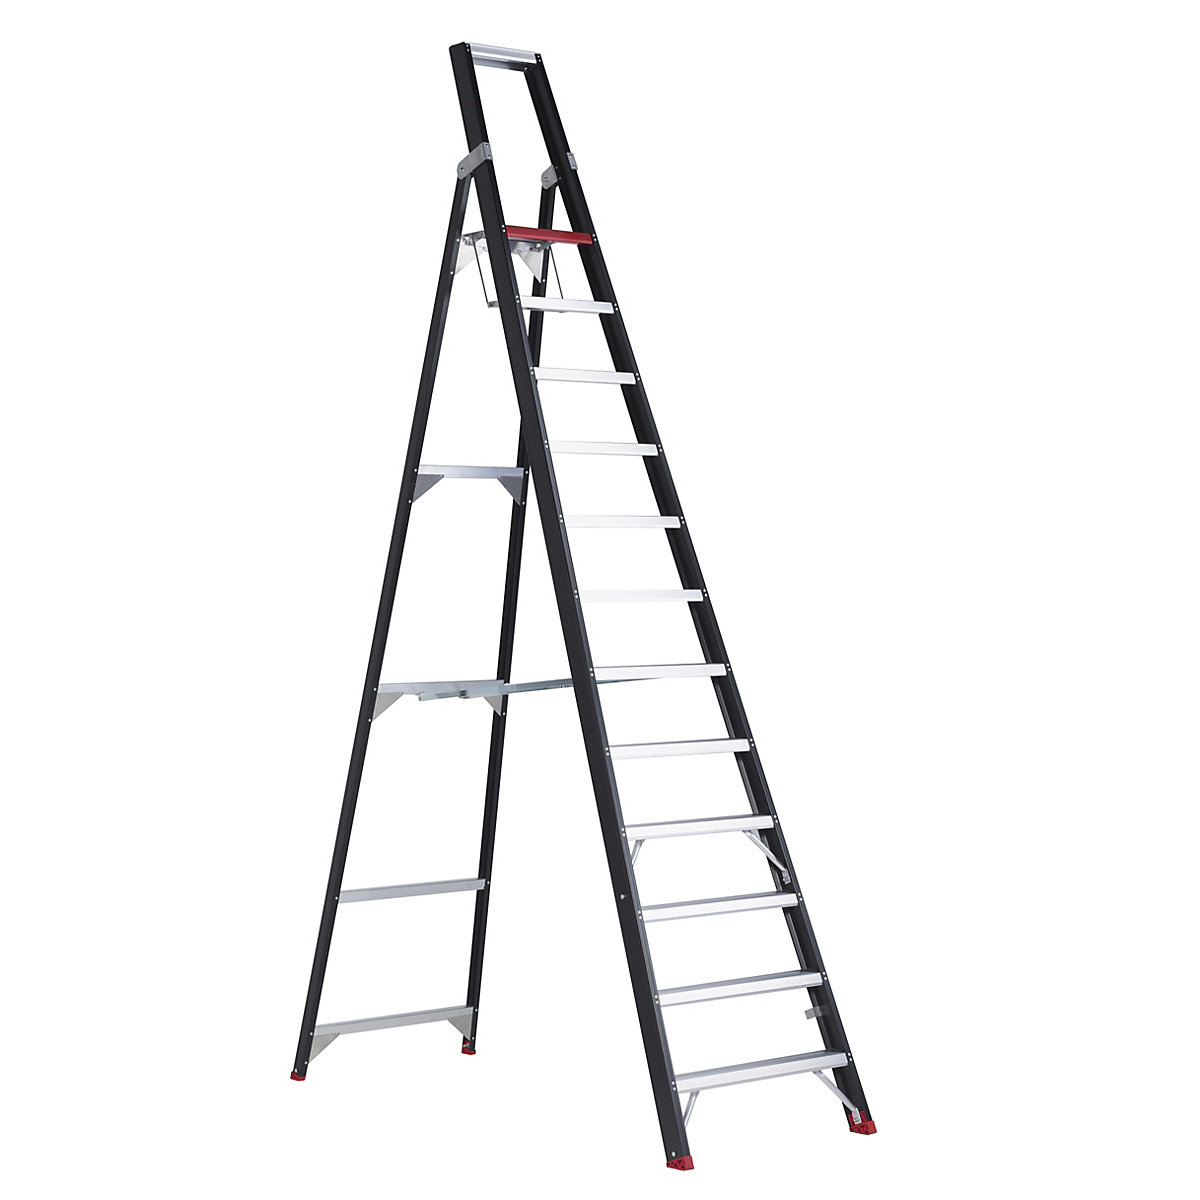 Safety step ladder – Altrex, single sided access, 12 steps incl. platform-14